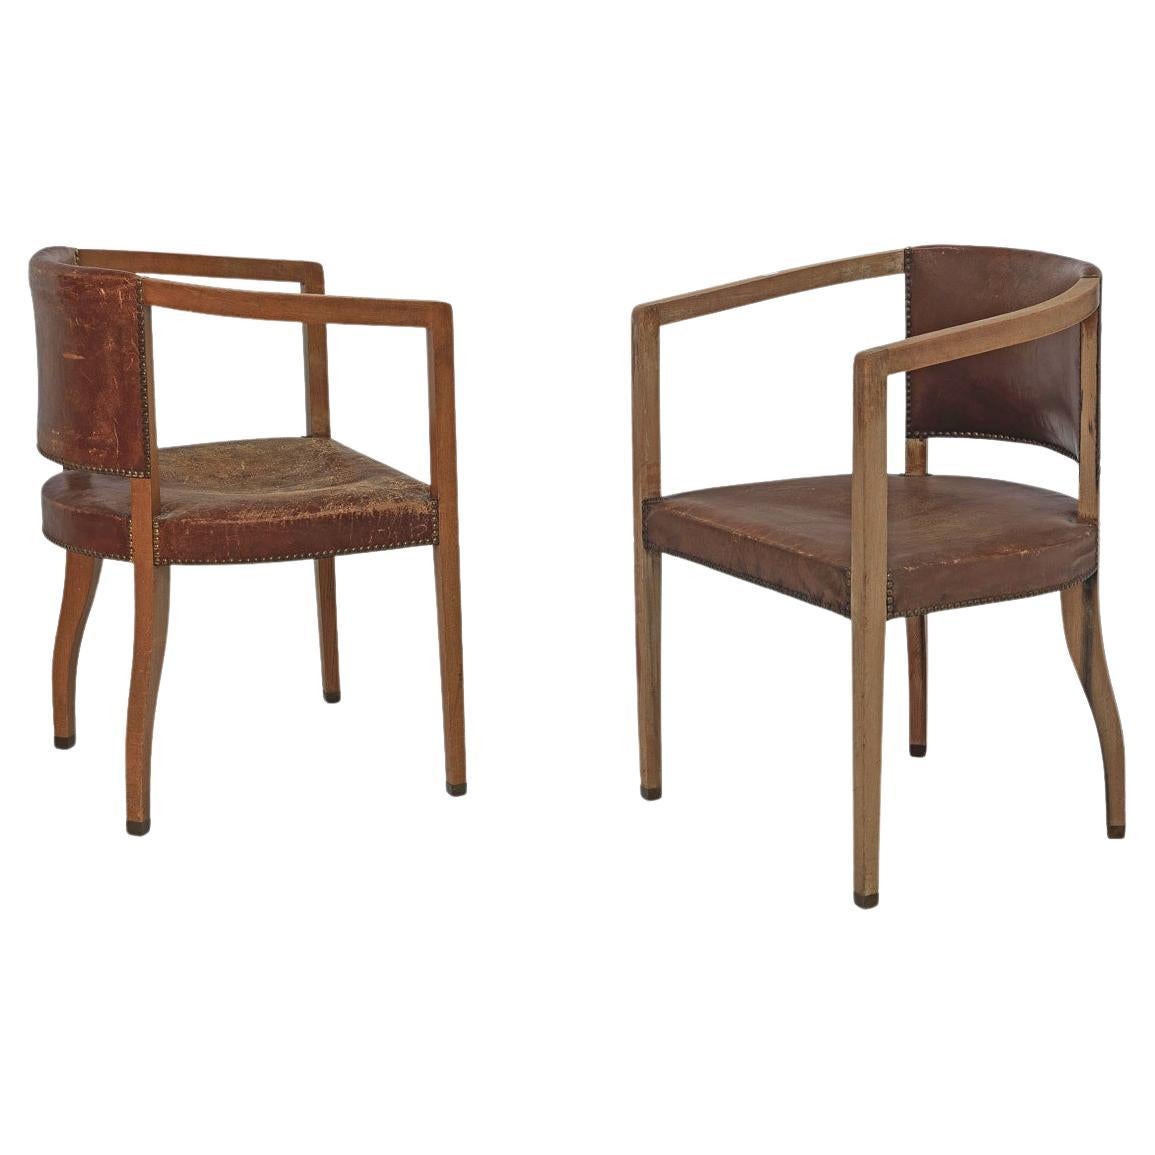 Original Pair of Carl Witzmann Chairs House Bergmann Jugendstil Secession Style